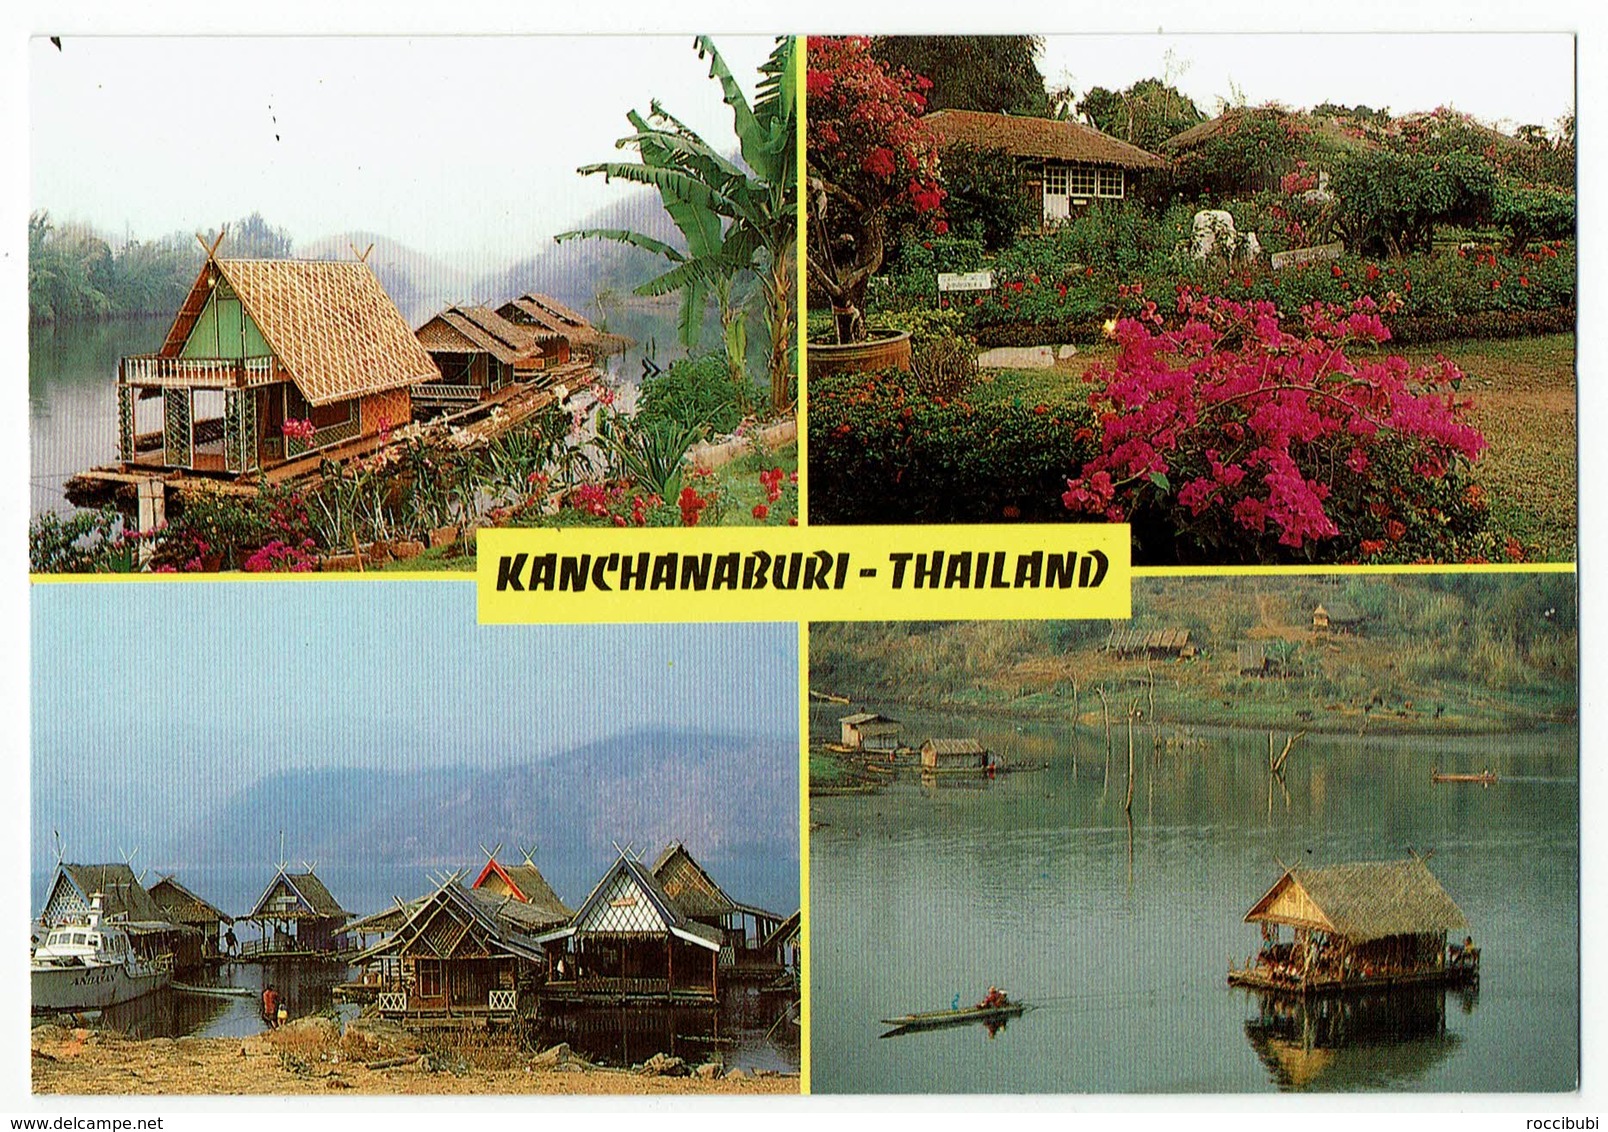 Thailand, Kanchanaburi - Thailand